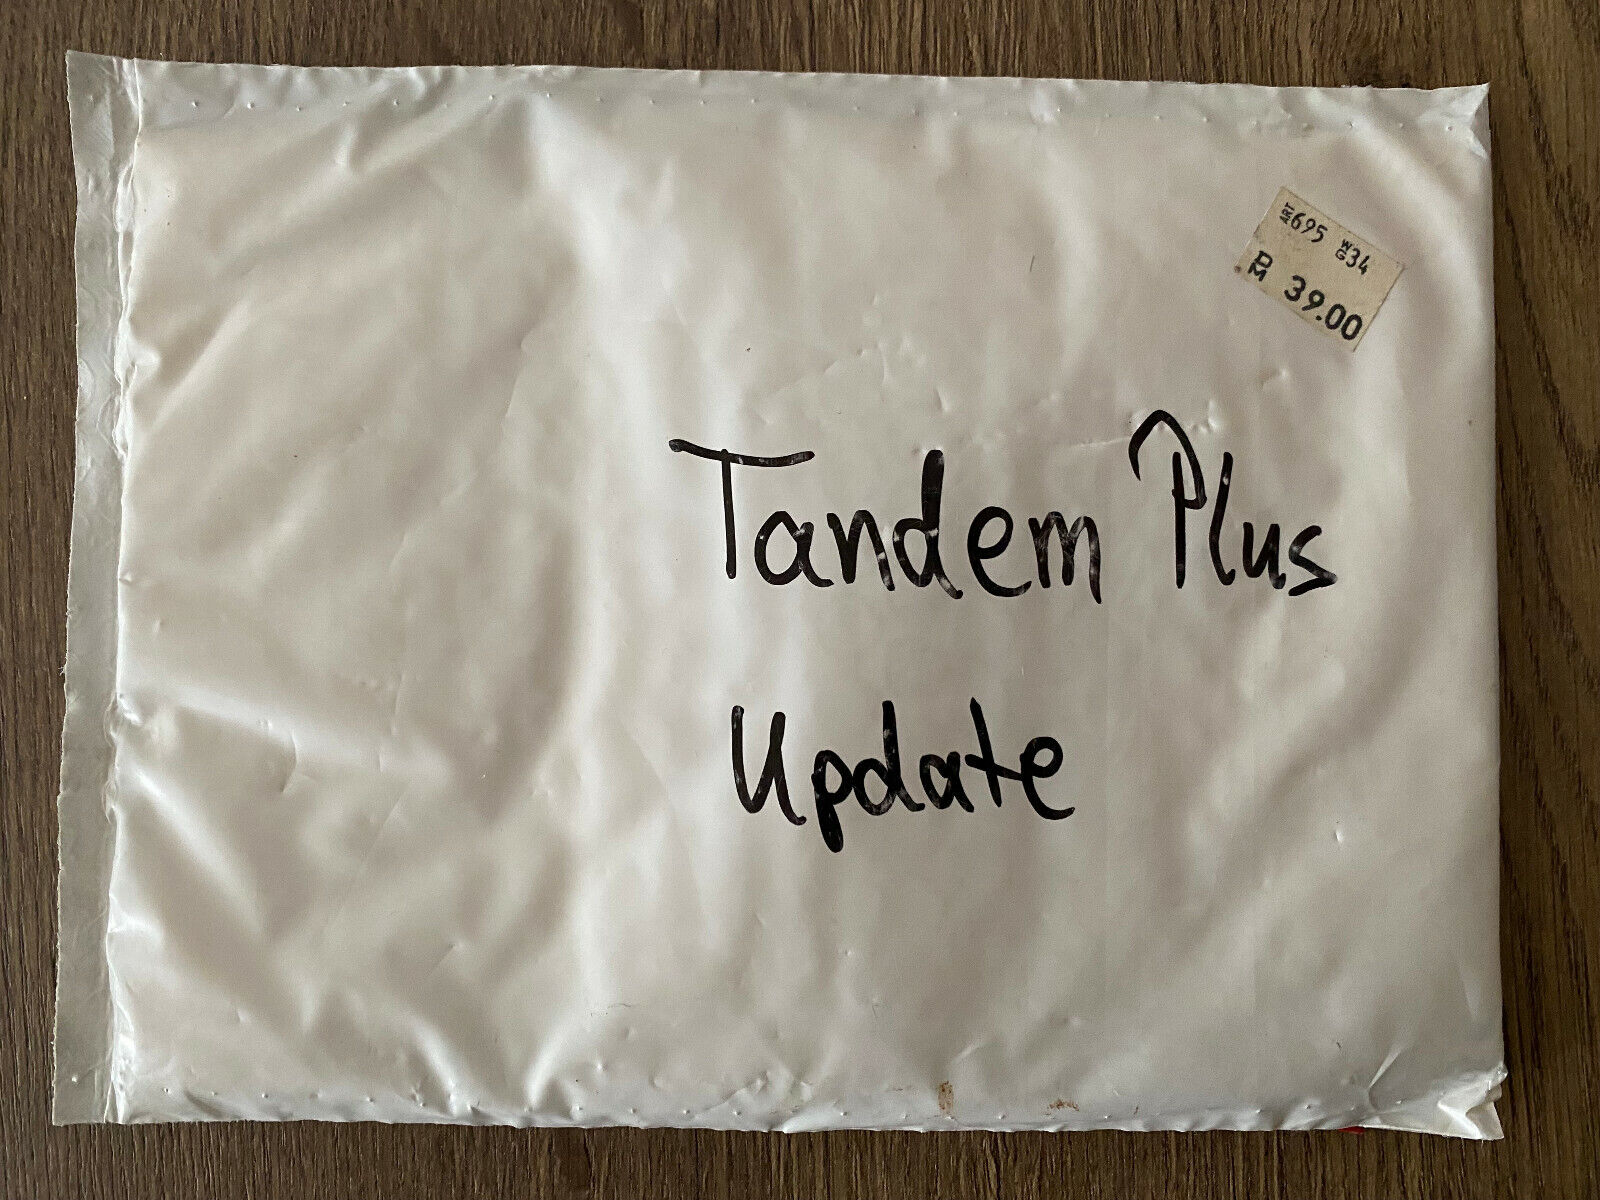 Tandem Plus Update, Original Disk And Instructions, German